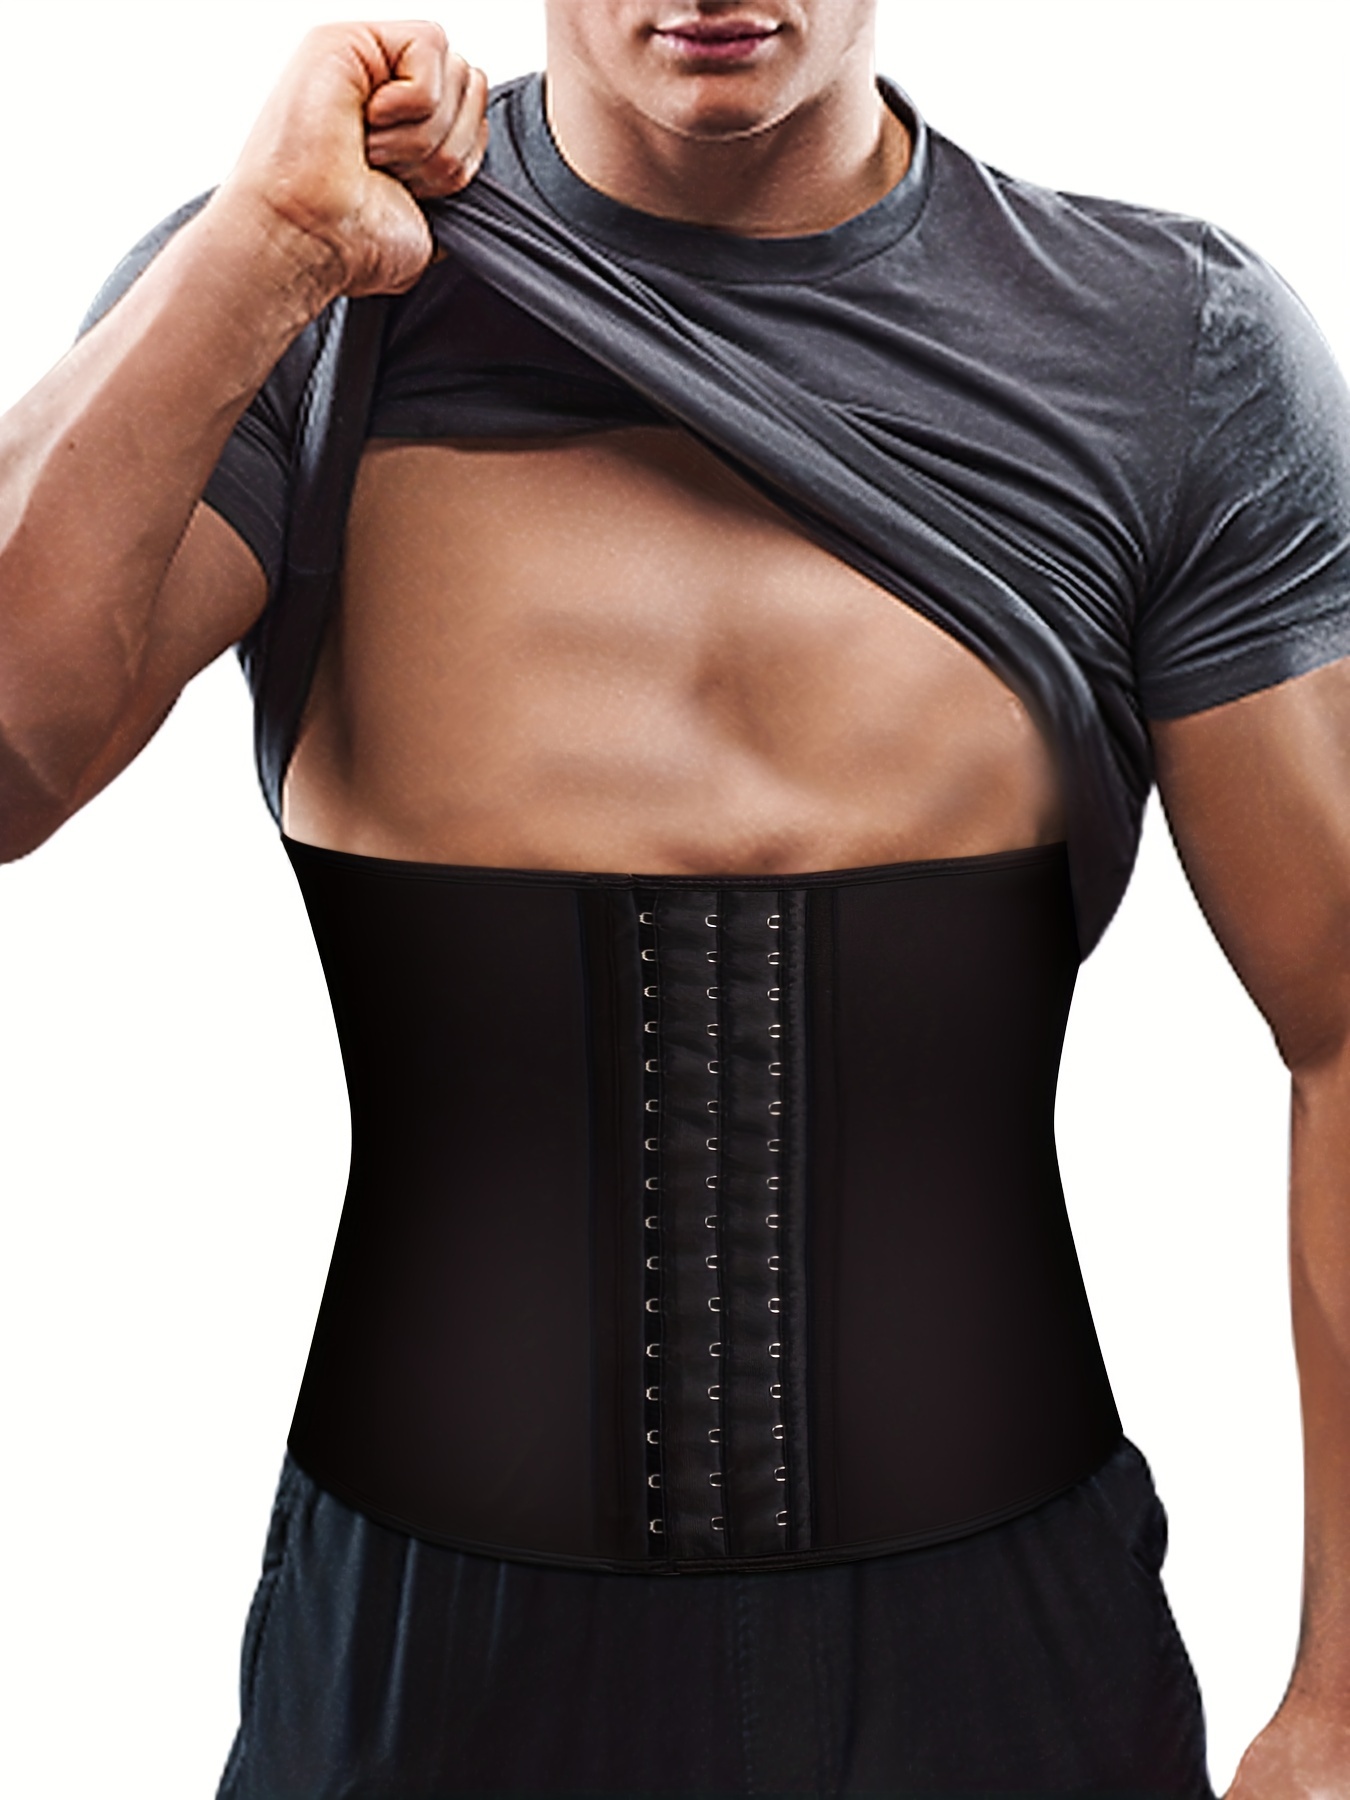 Junlan Neoprene Waist Trainer Belt for Men Tummy Control Waist Trimmer for  Weight loss Slimming Body Shaper for Sport Workout(Black, S) 